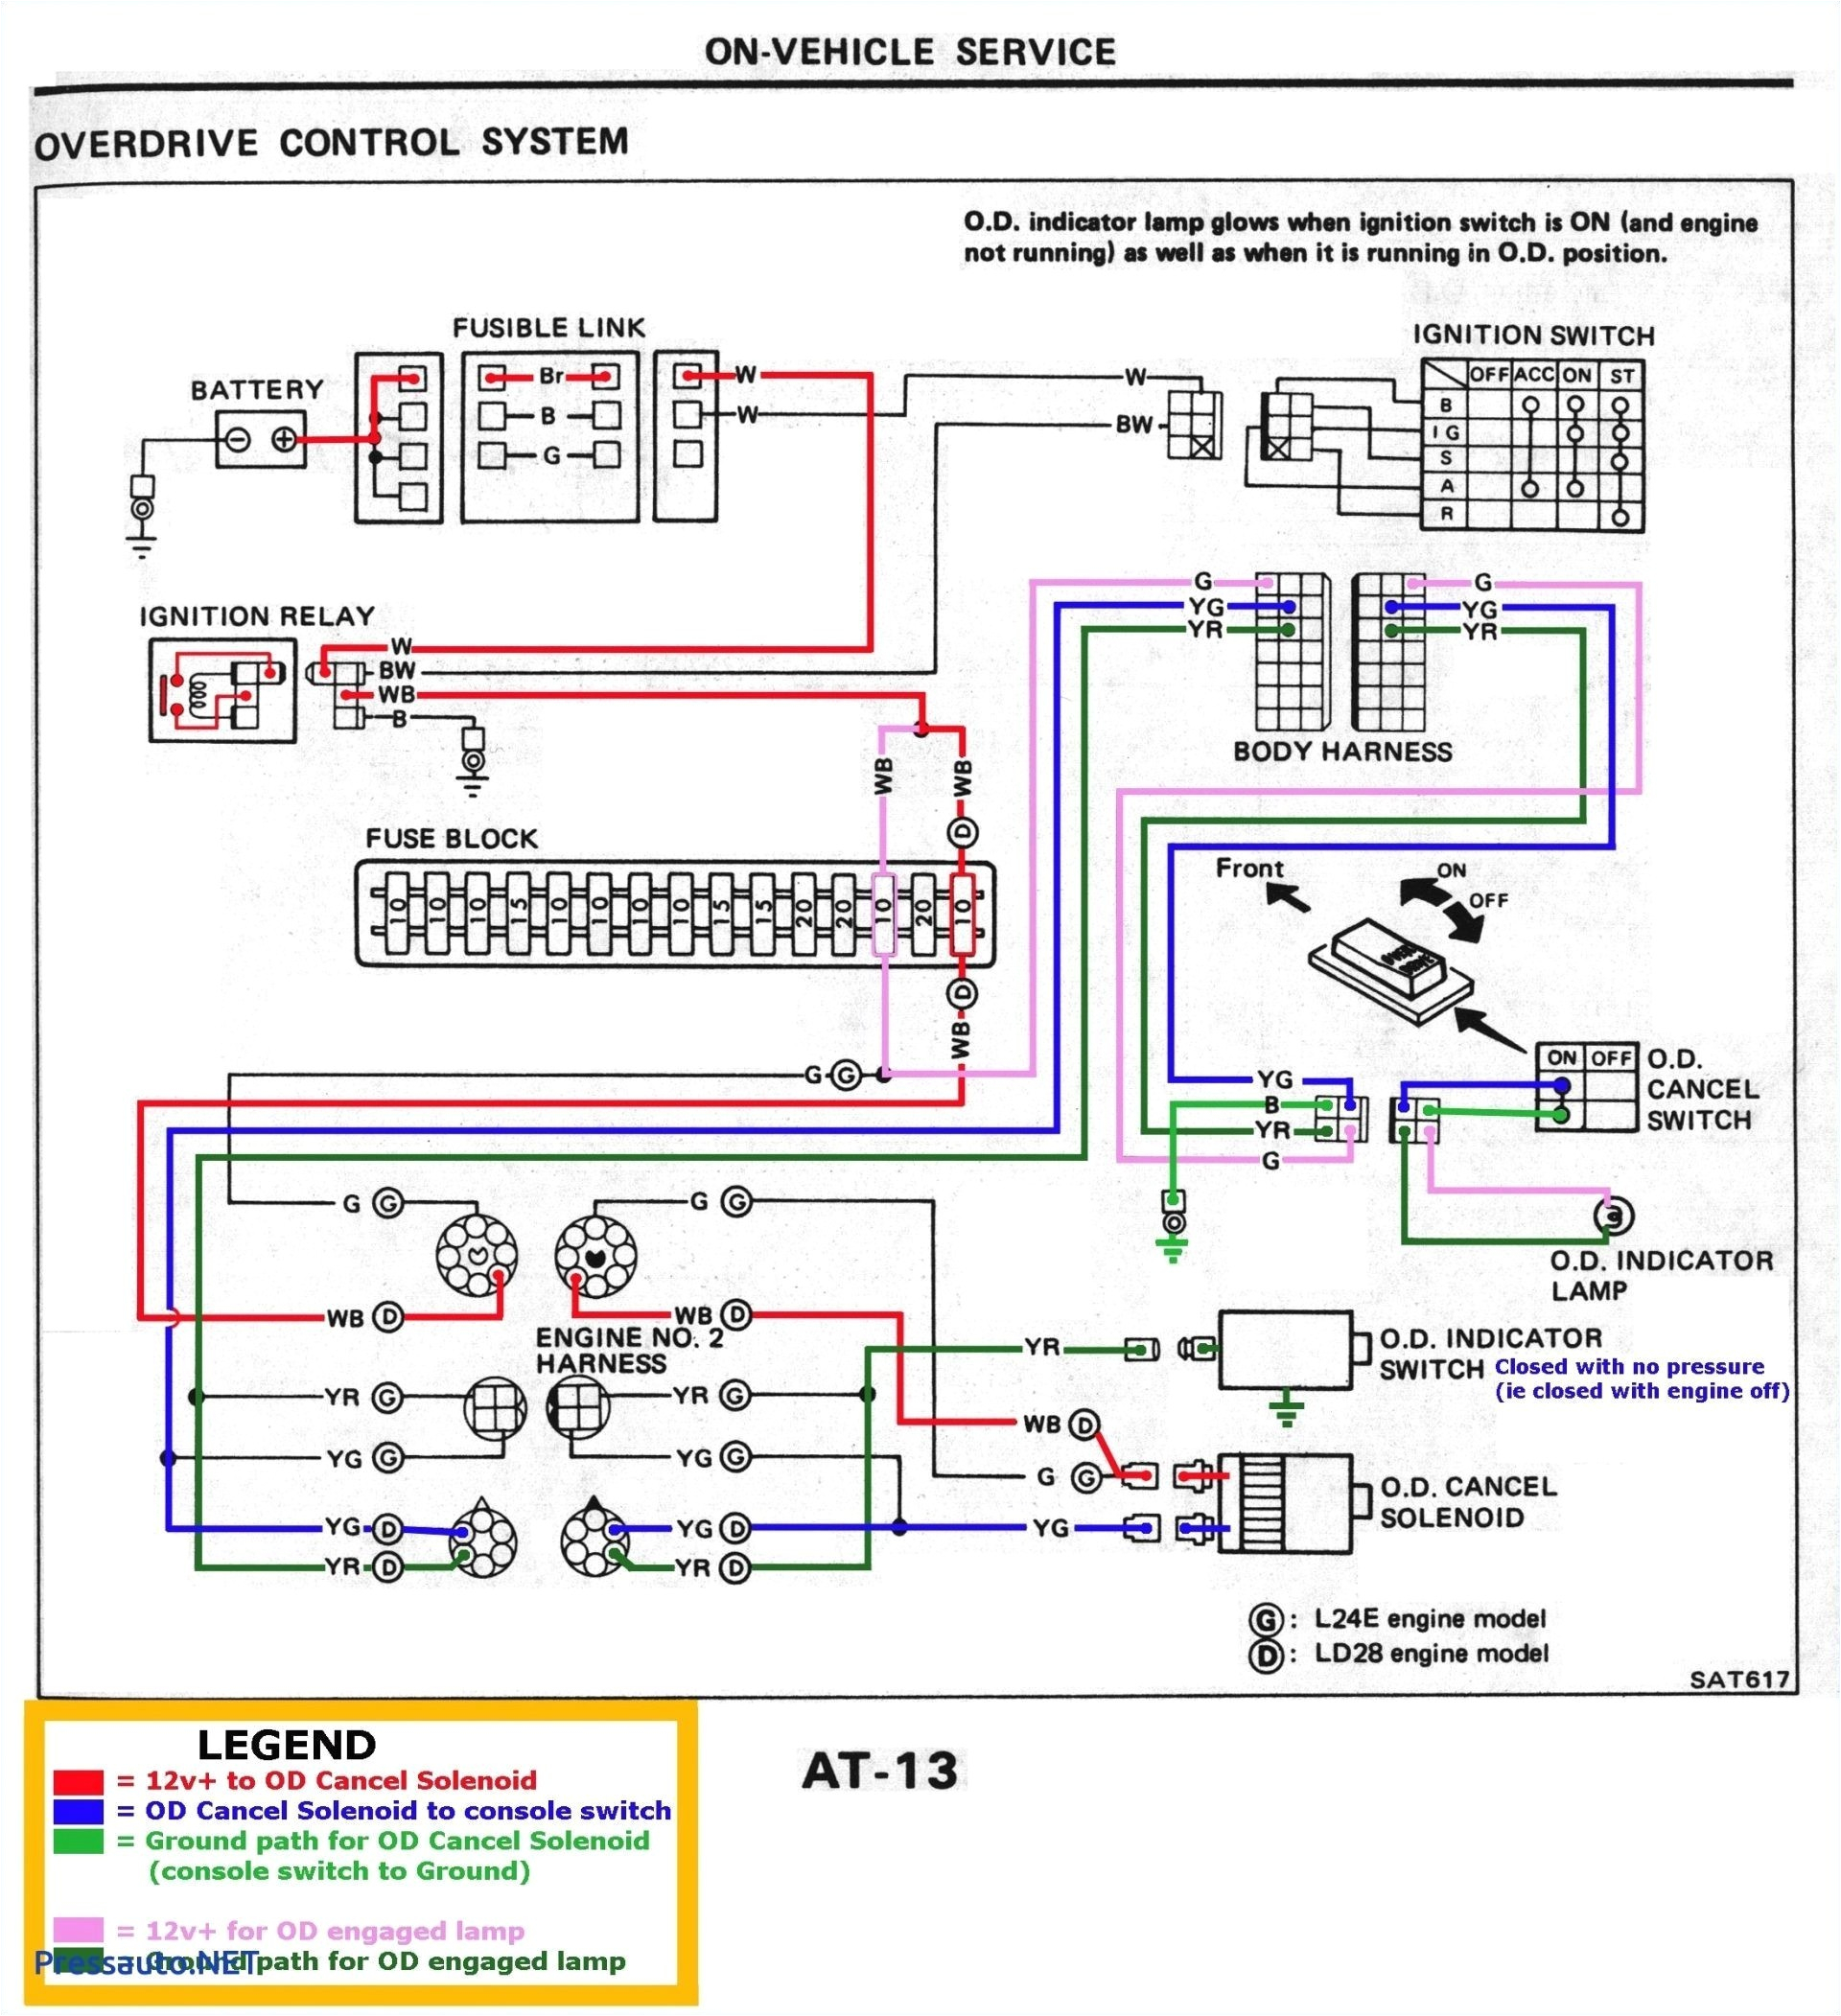 2ls wiring diagram wiring diagram datasource gl1200 ignition switch wiring diagram